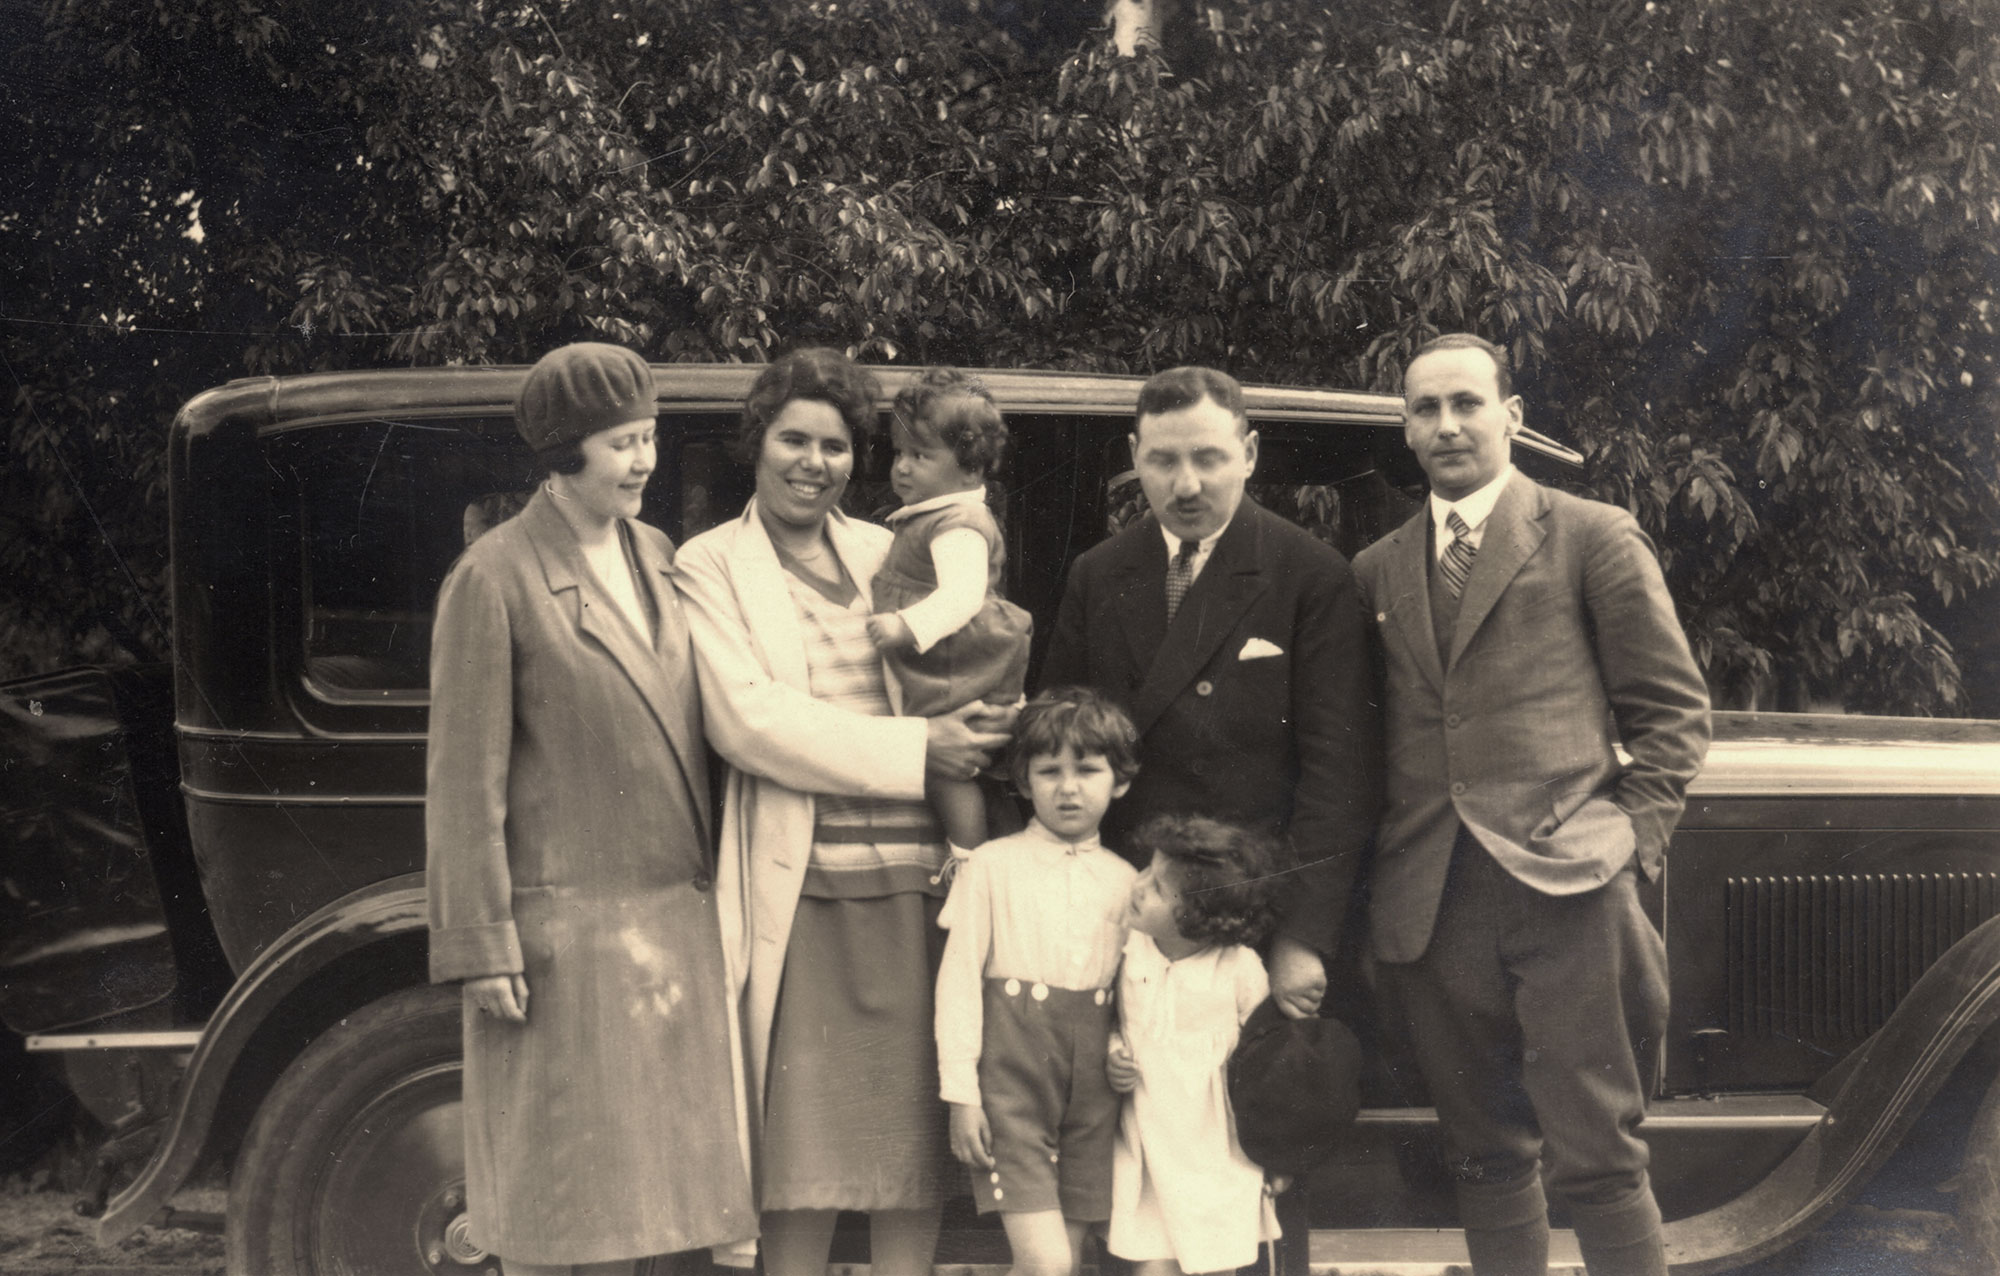 The Goldschmidt family. Yad Vashem Photo Archive 9135/5